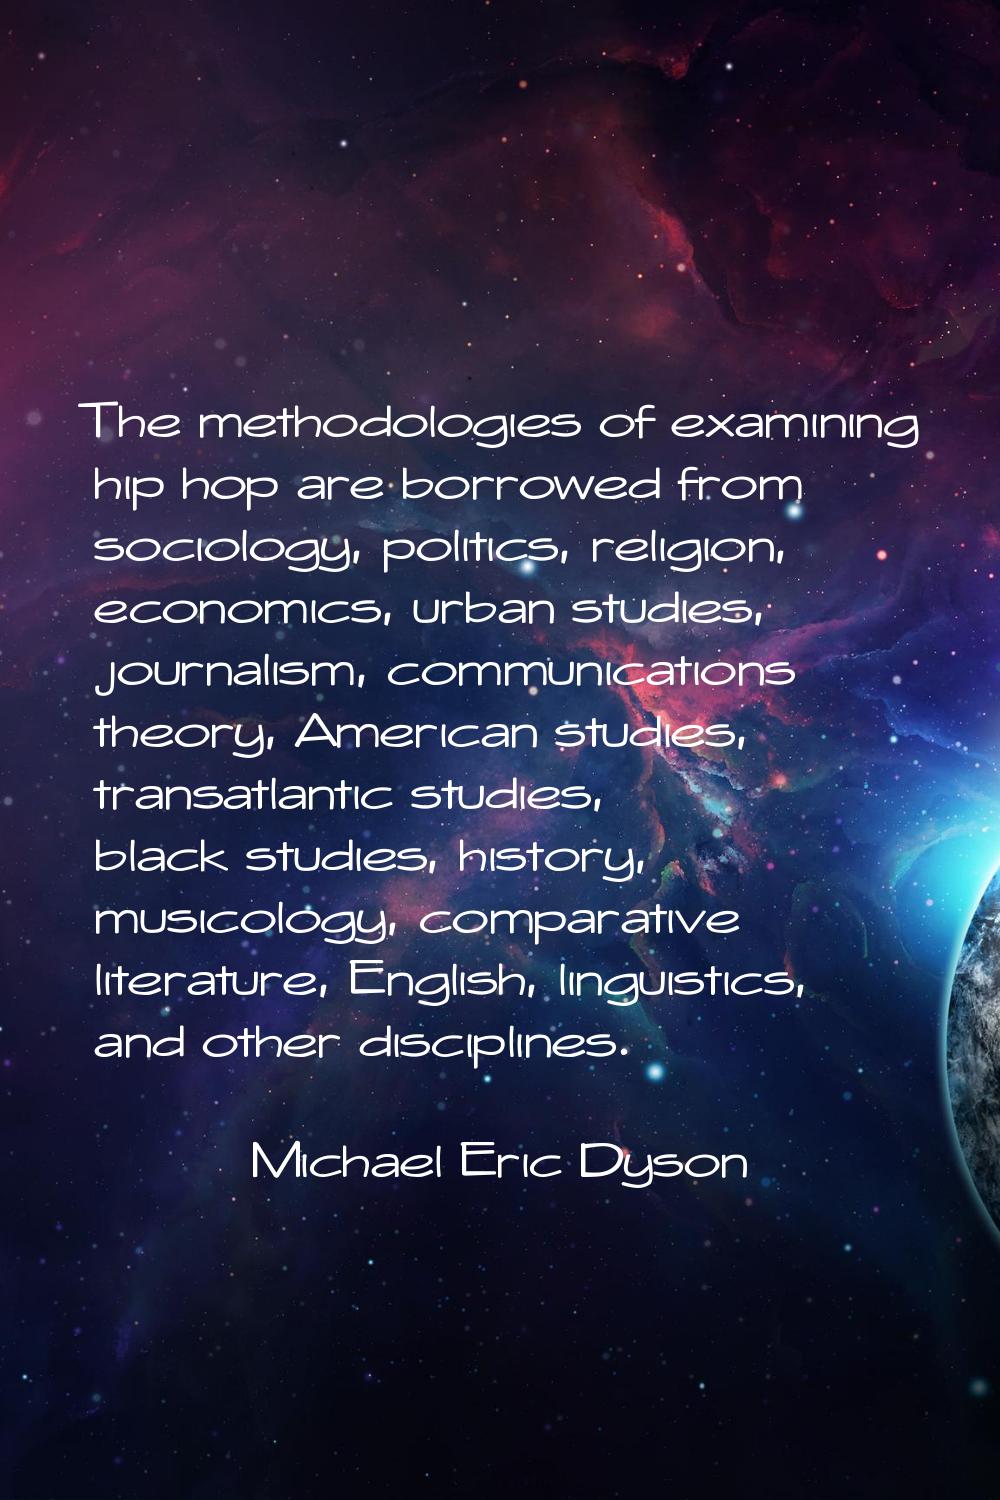 The methodologies of examining hip hop are borrowed from sociology, politics, religion, economics, 